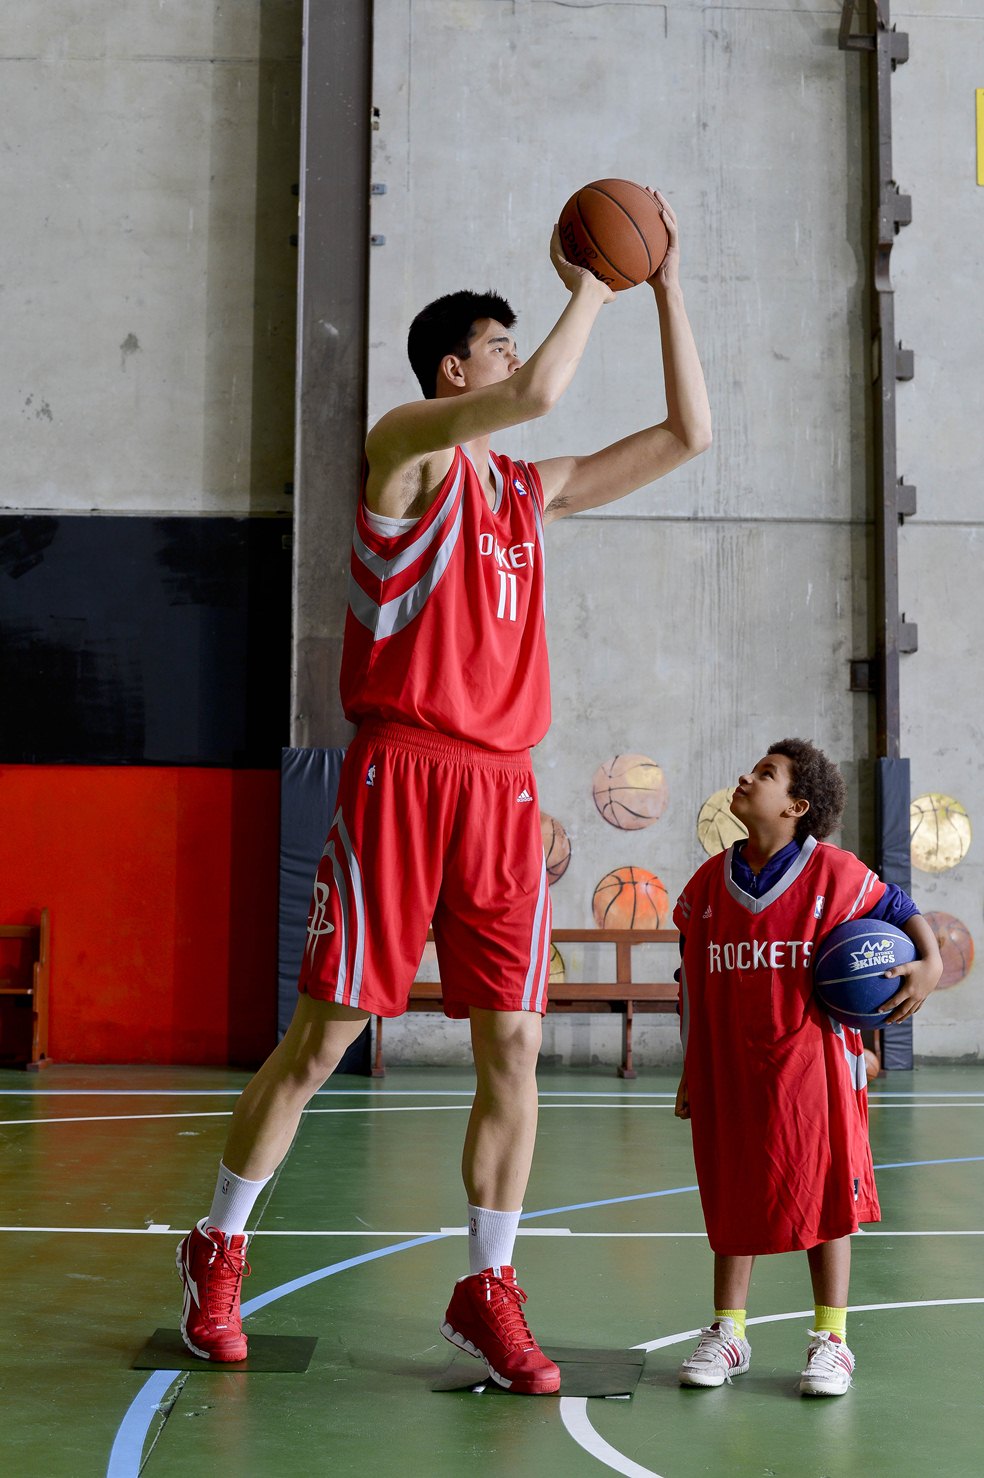 yao ming playing basket ball with child